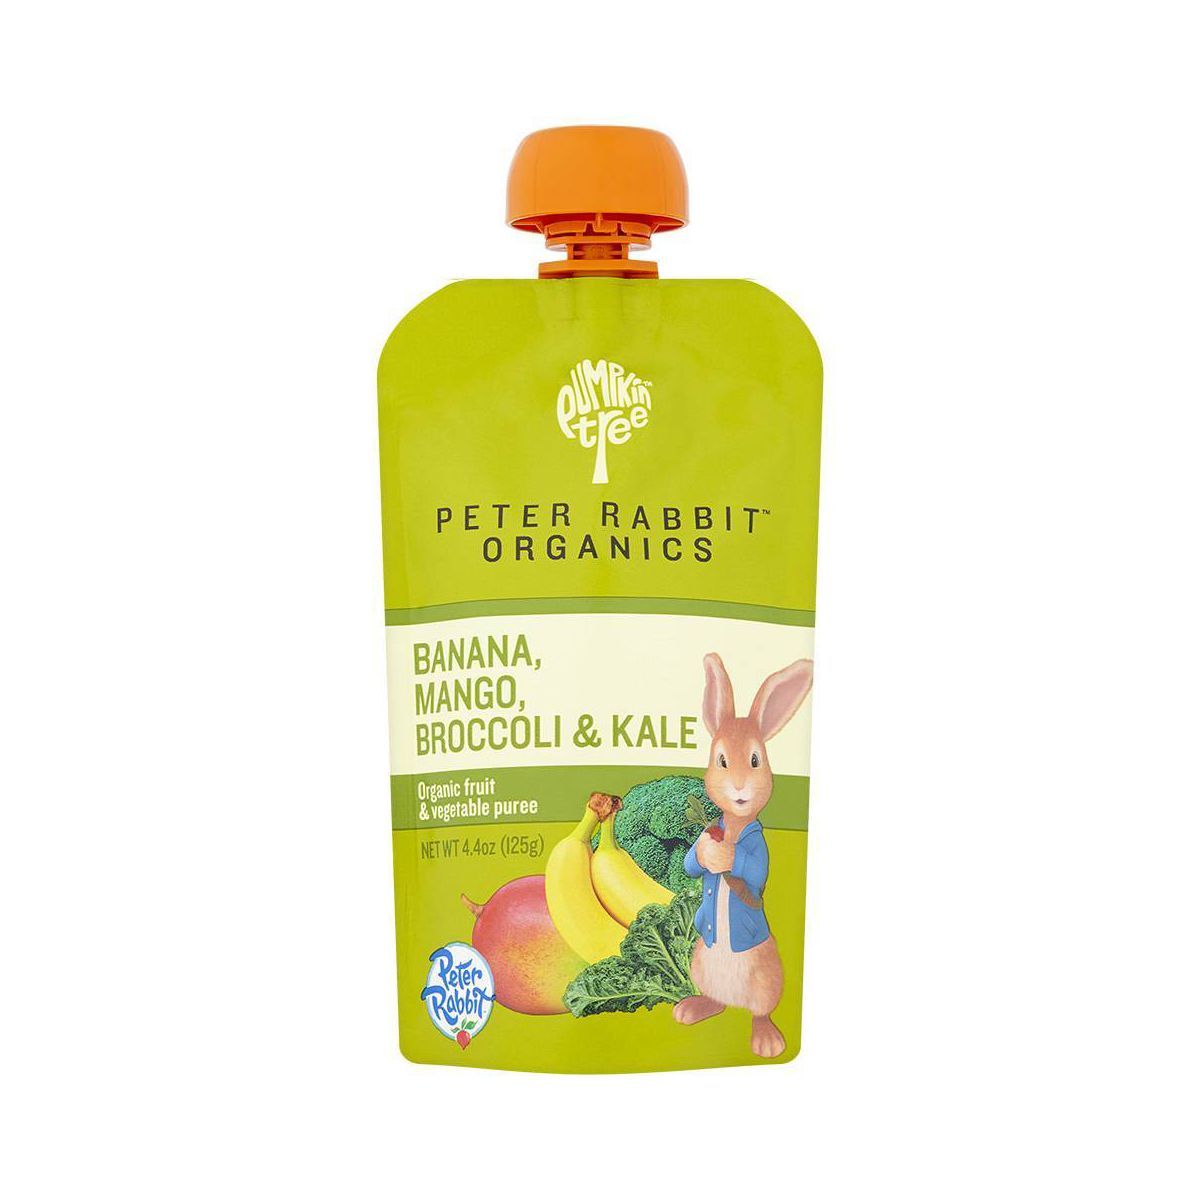 Peter Rabbit Organics Banana Mango Broccoli & Kale Baby Food Pouch - 4.4oz | Target